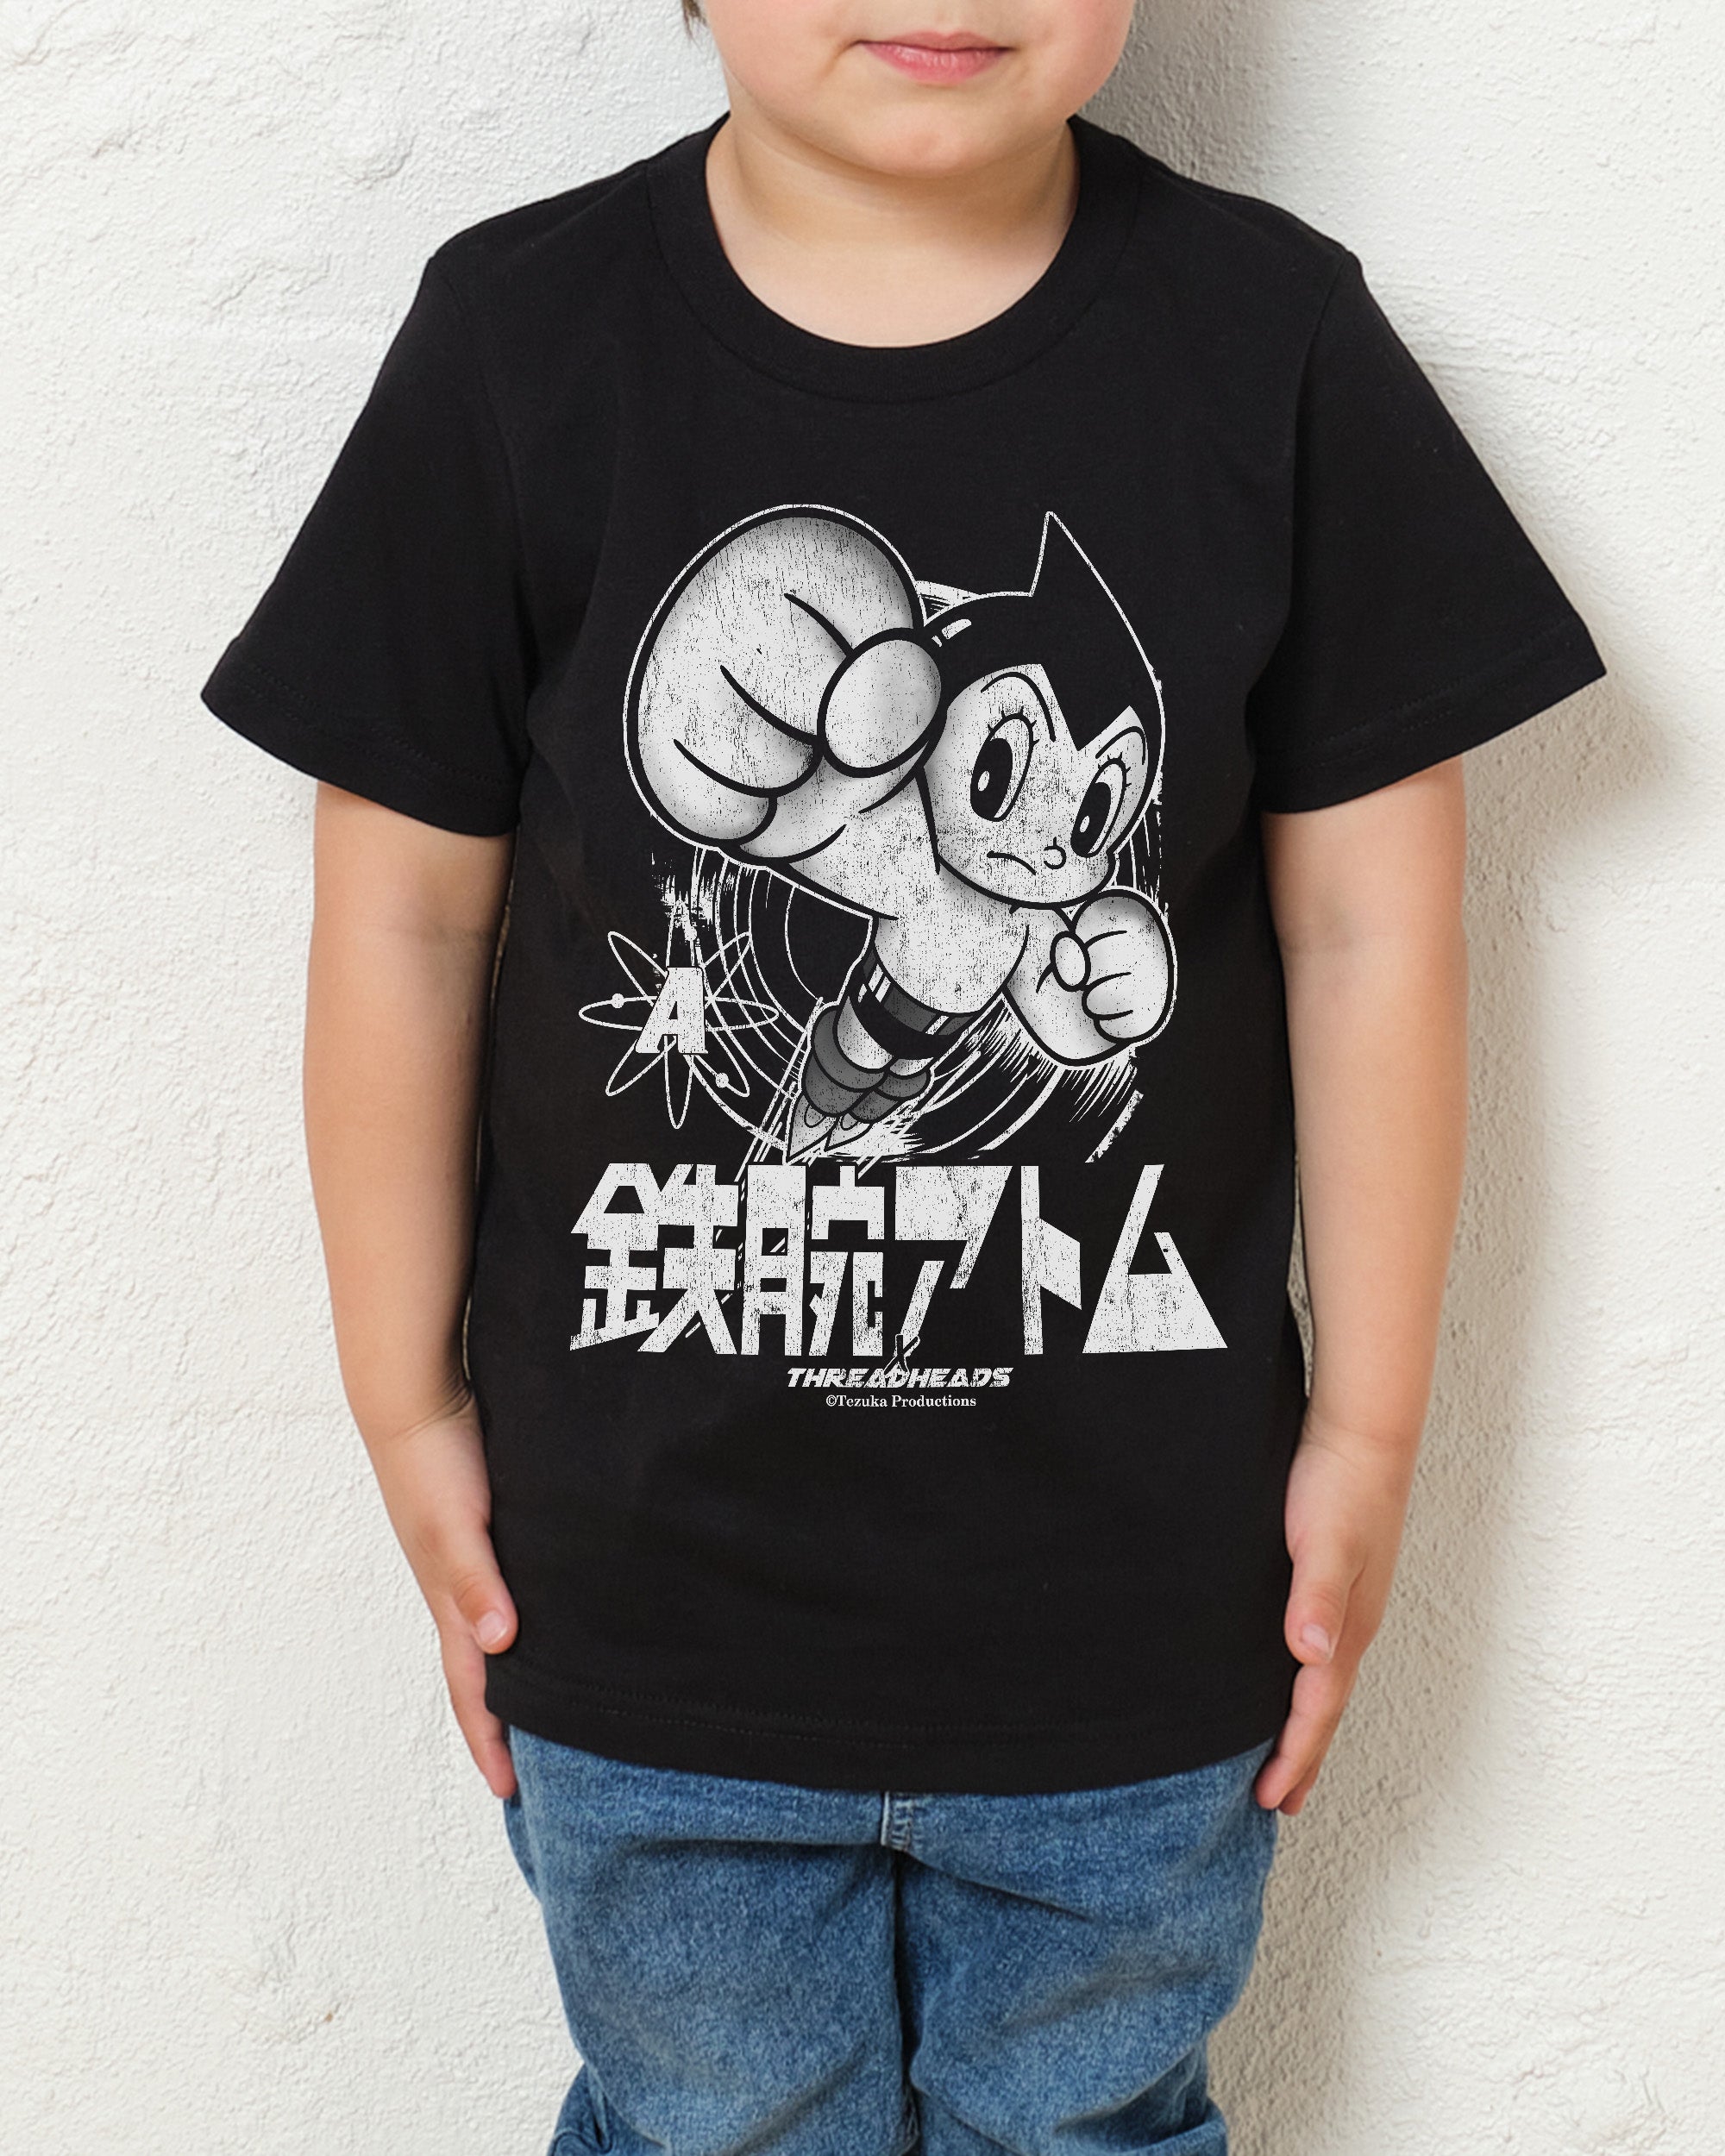 Astro Boy Black and White Kids T-Shirt